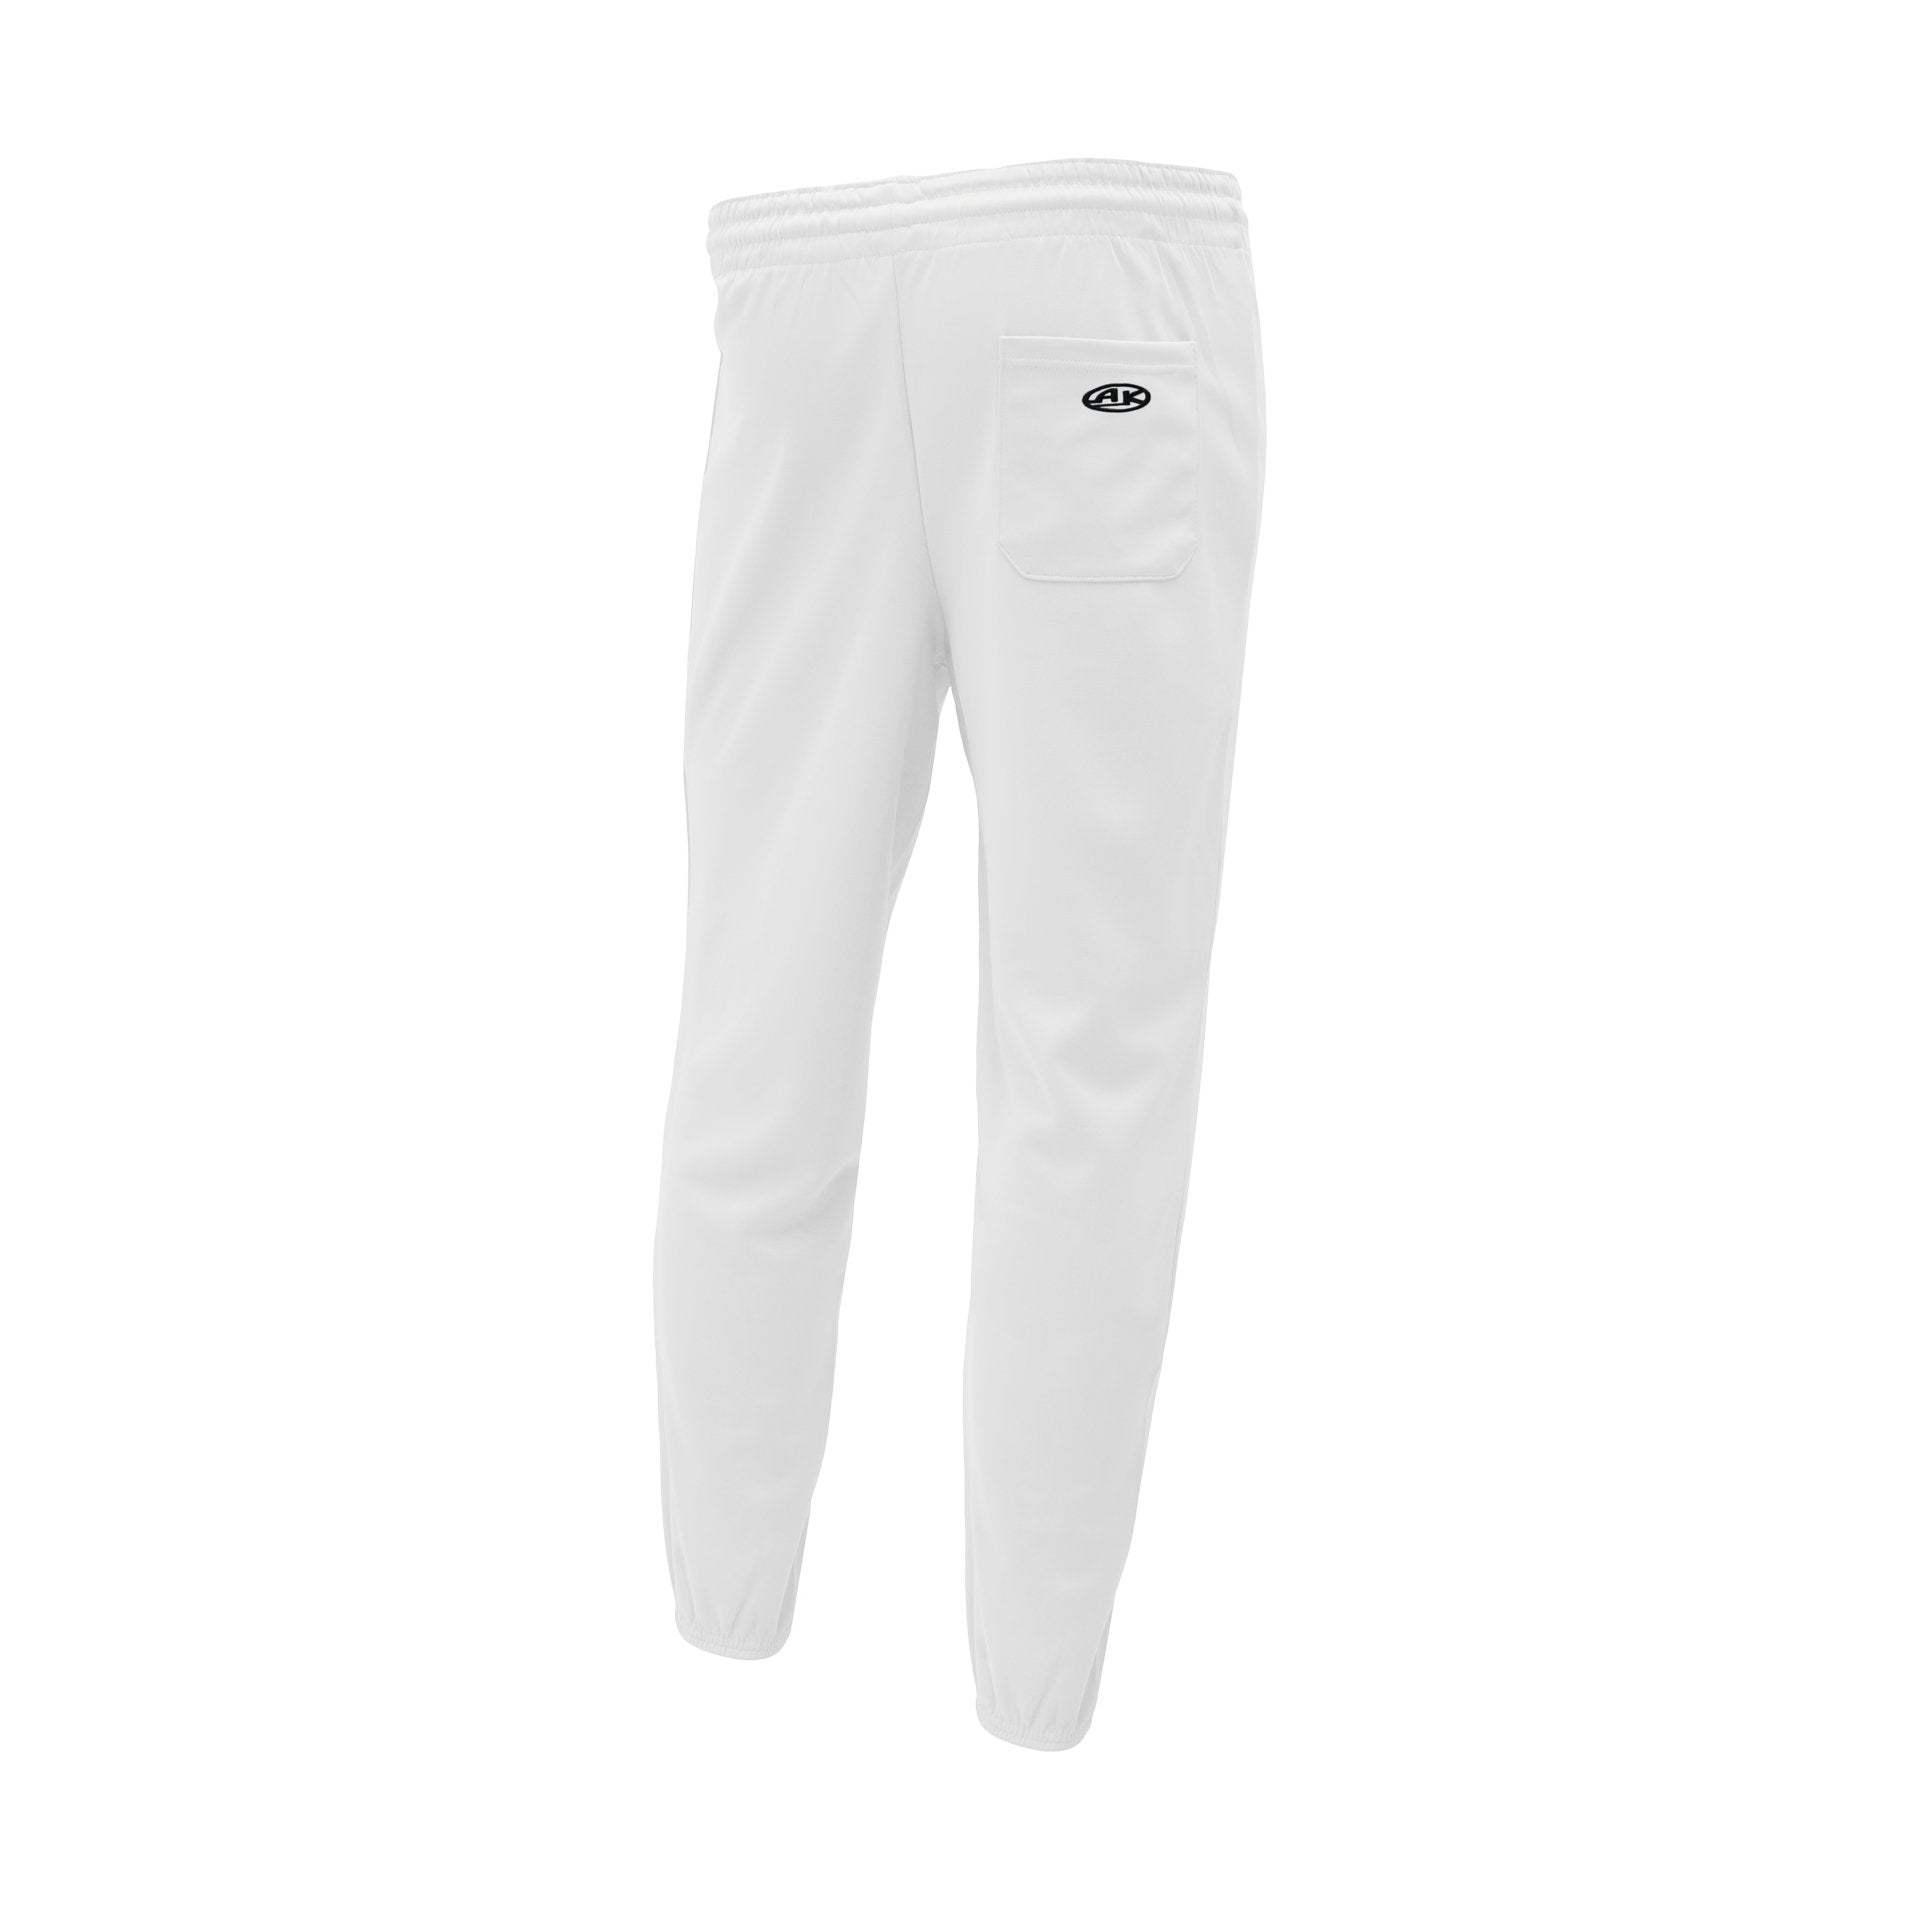 Premium Baseball Pants, Drawstring, Elastic Bottom, White, ba1371-000, back